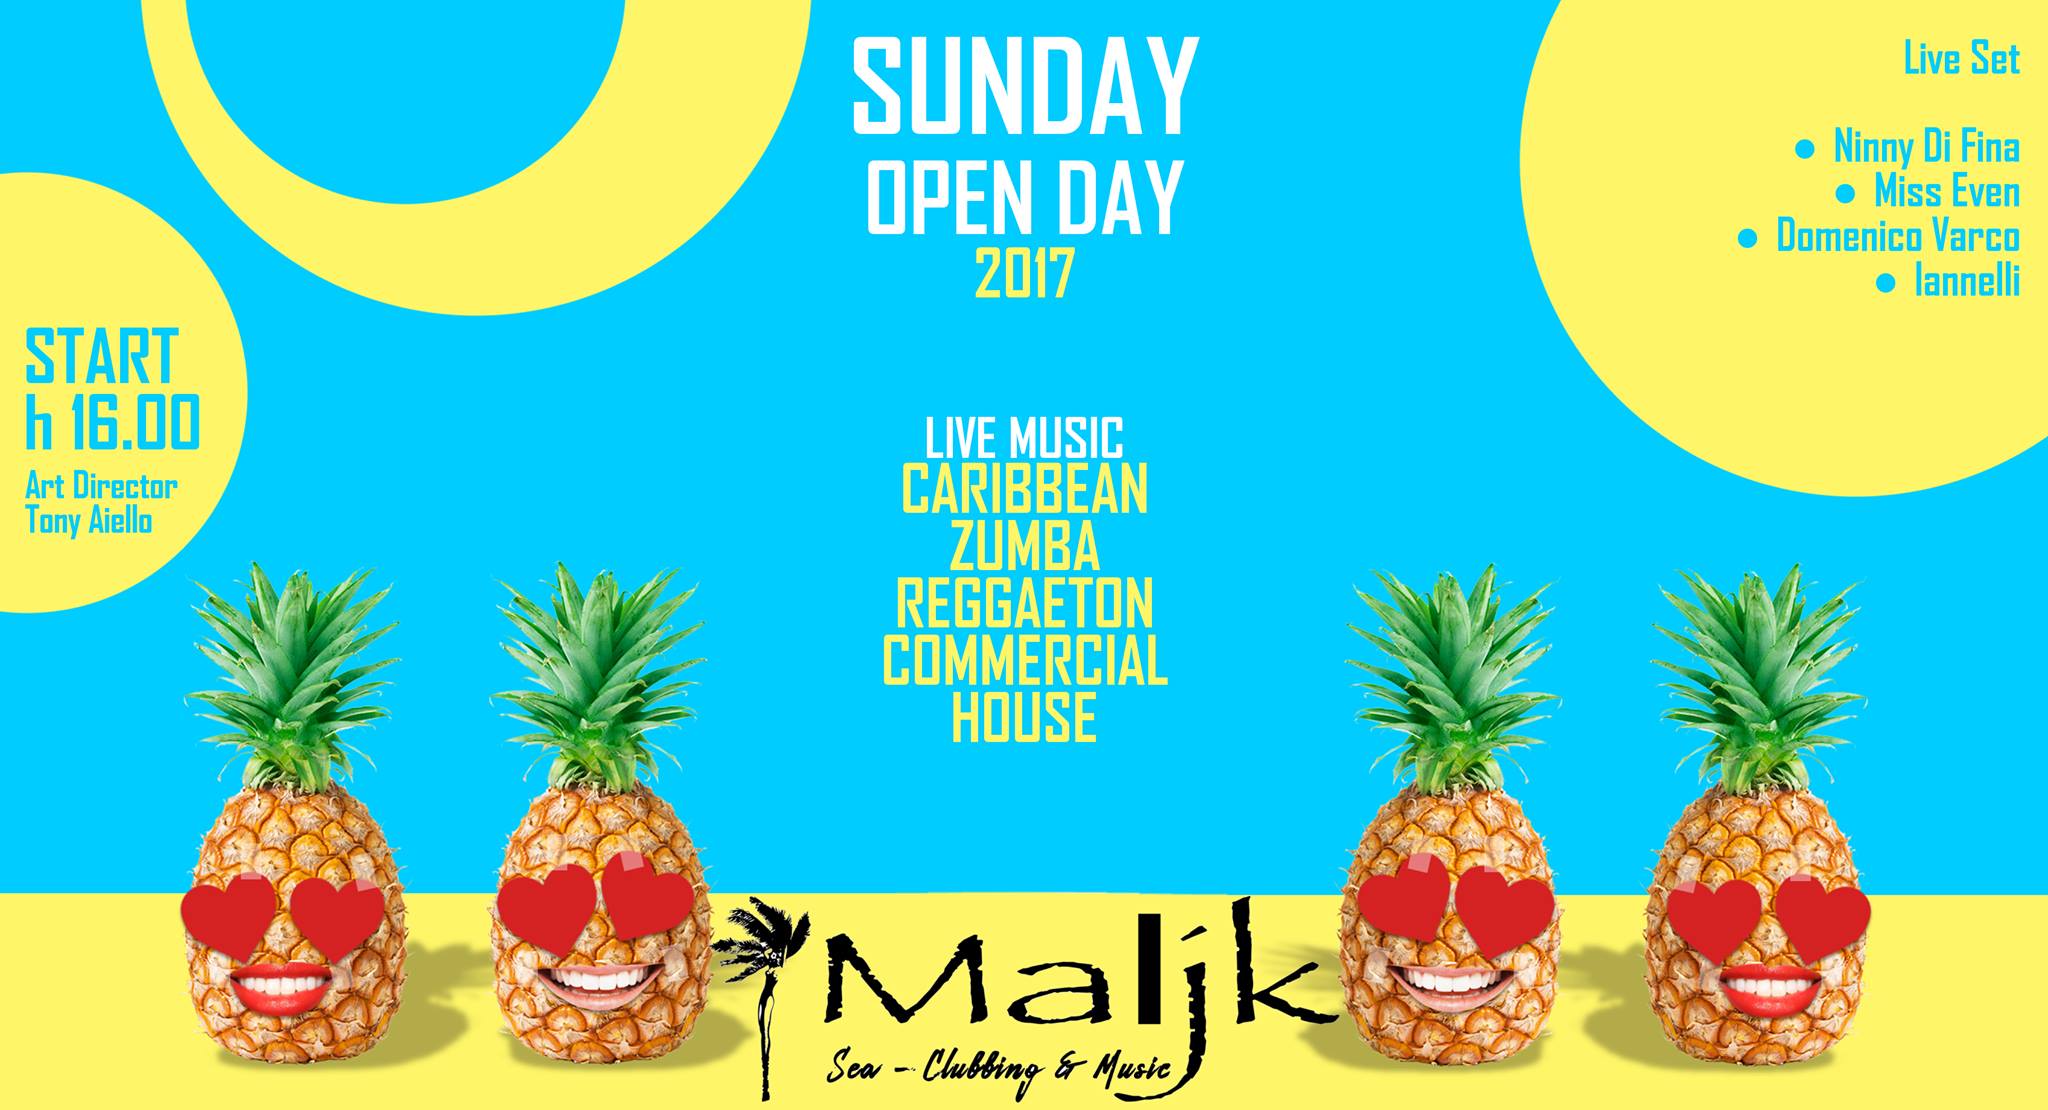 Maljk Discoteca: SUNDAY Open Day